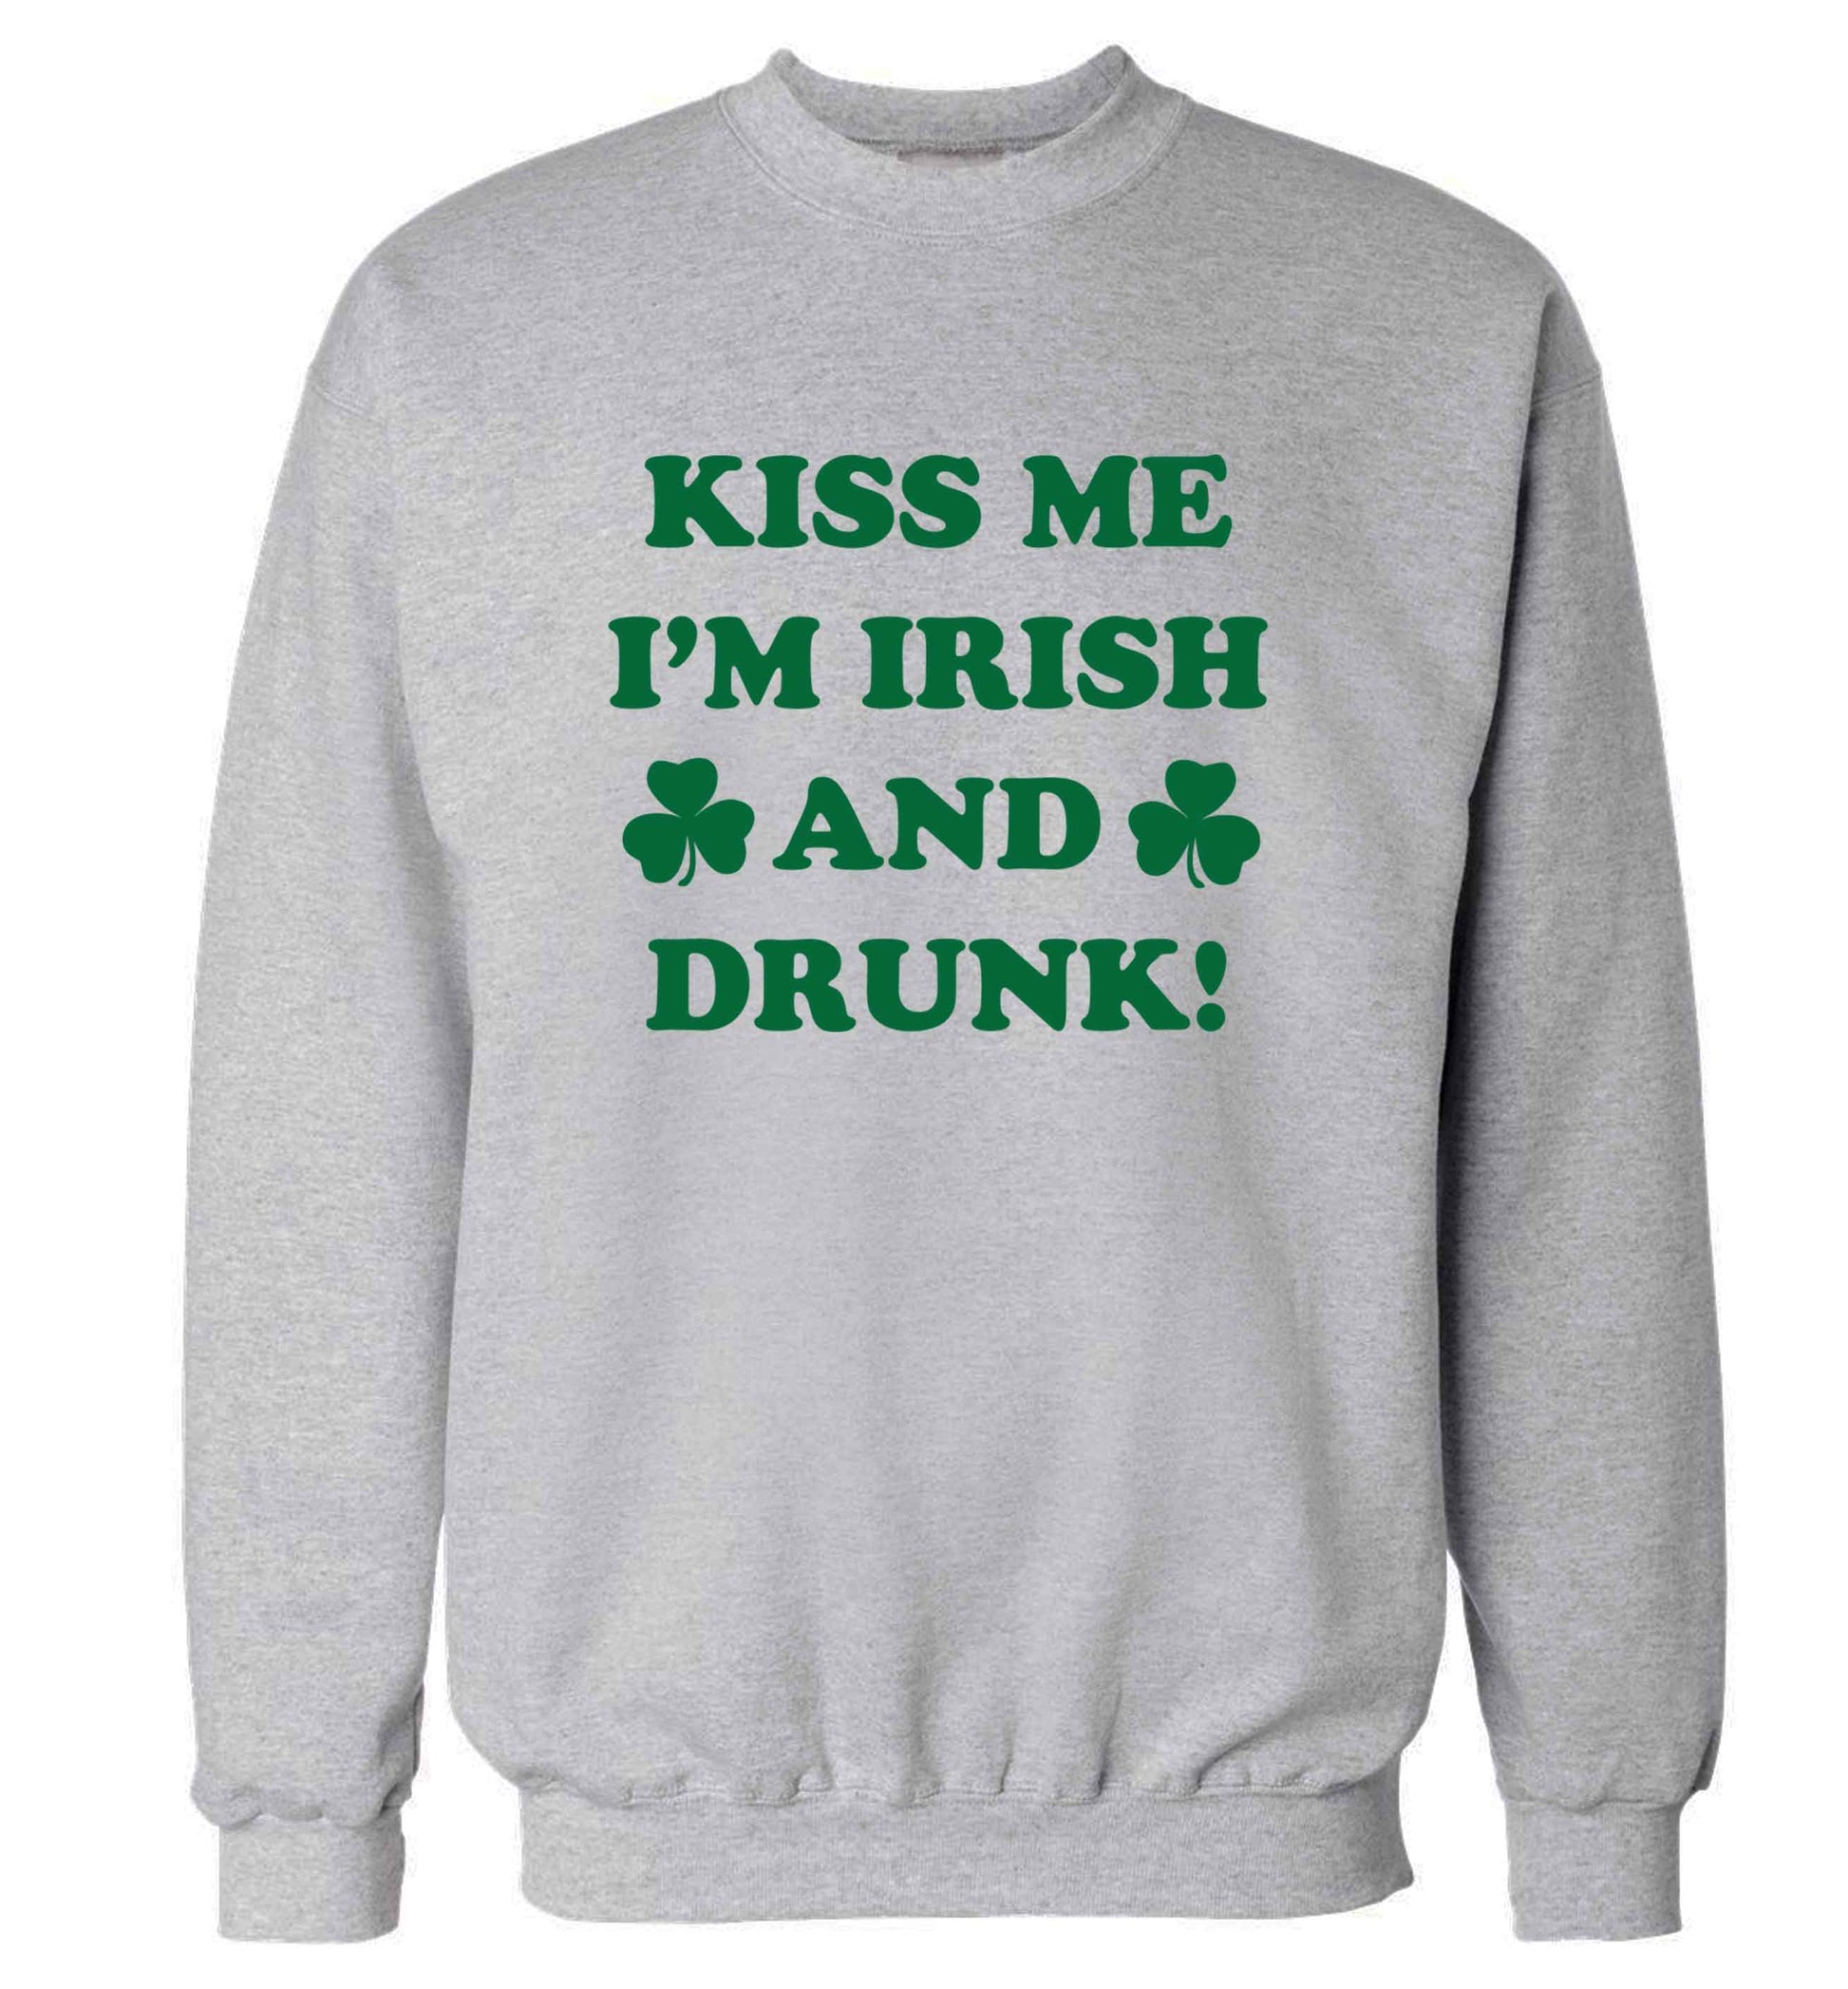 Kiss me I'm Irish and drunk adult's unisex grey sweater 2XL